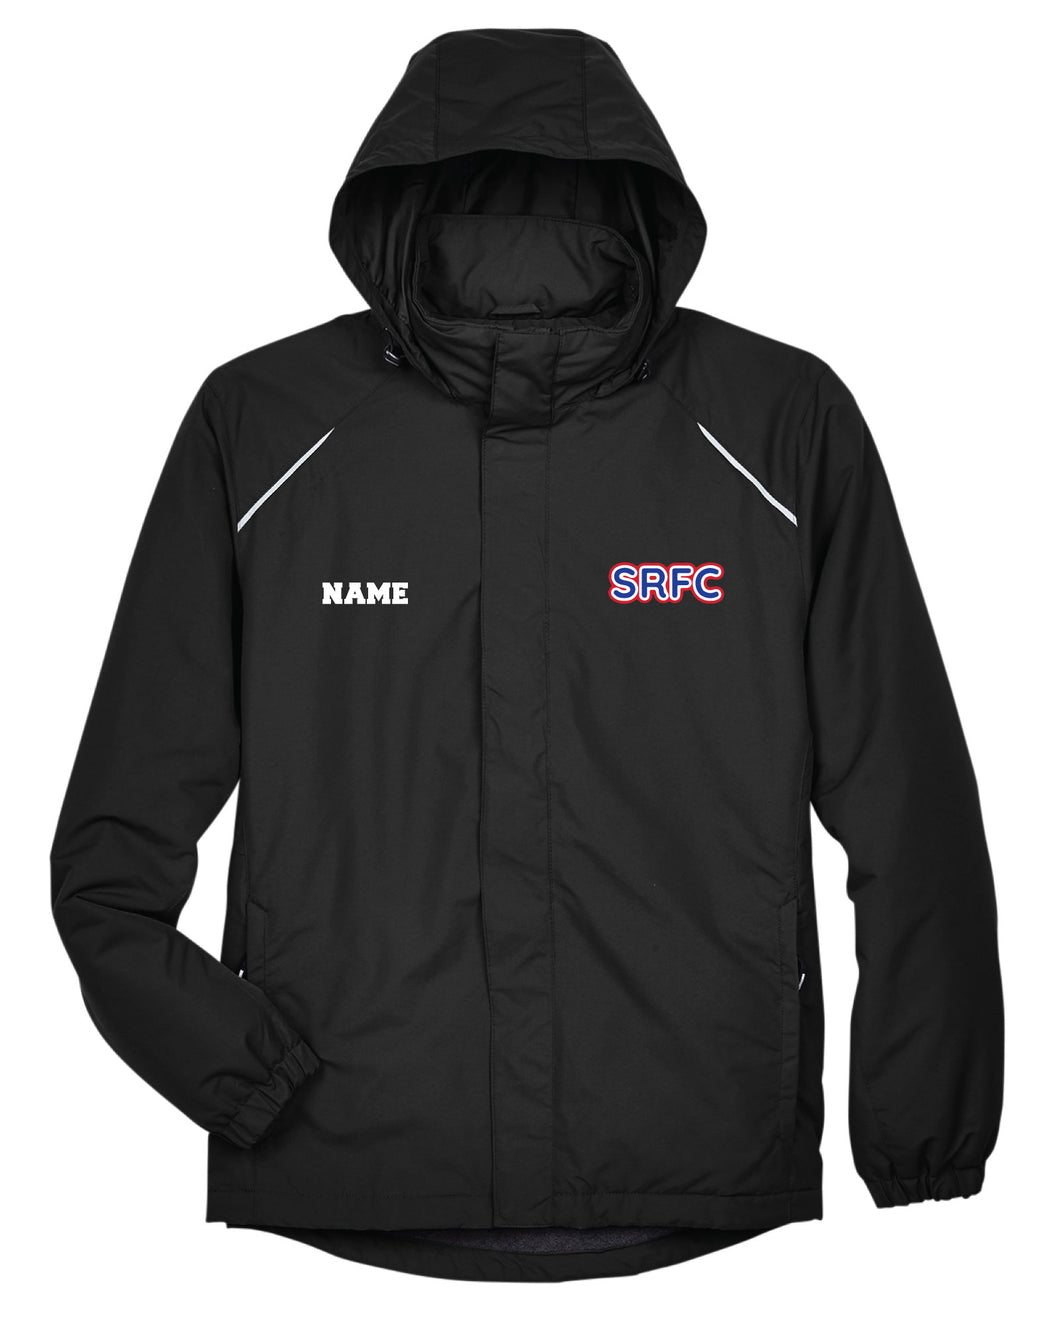 SRFC All Season Hooded Men's Jacket - Black - 5KounT2018